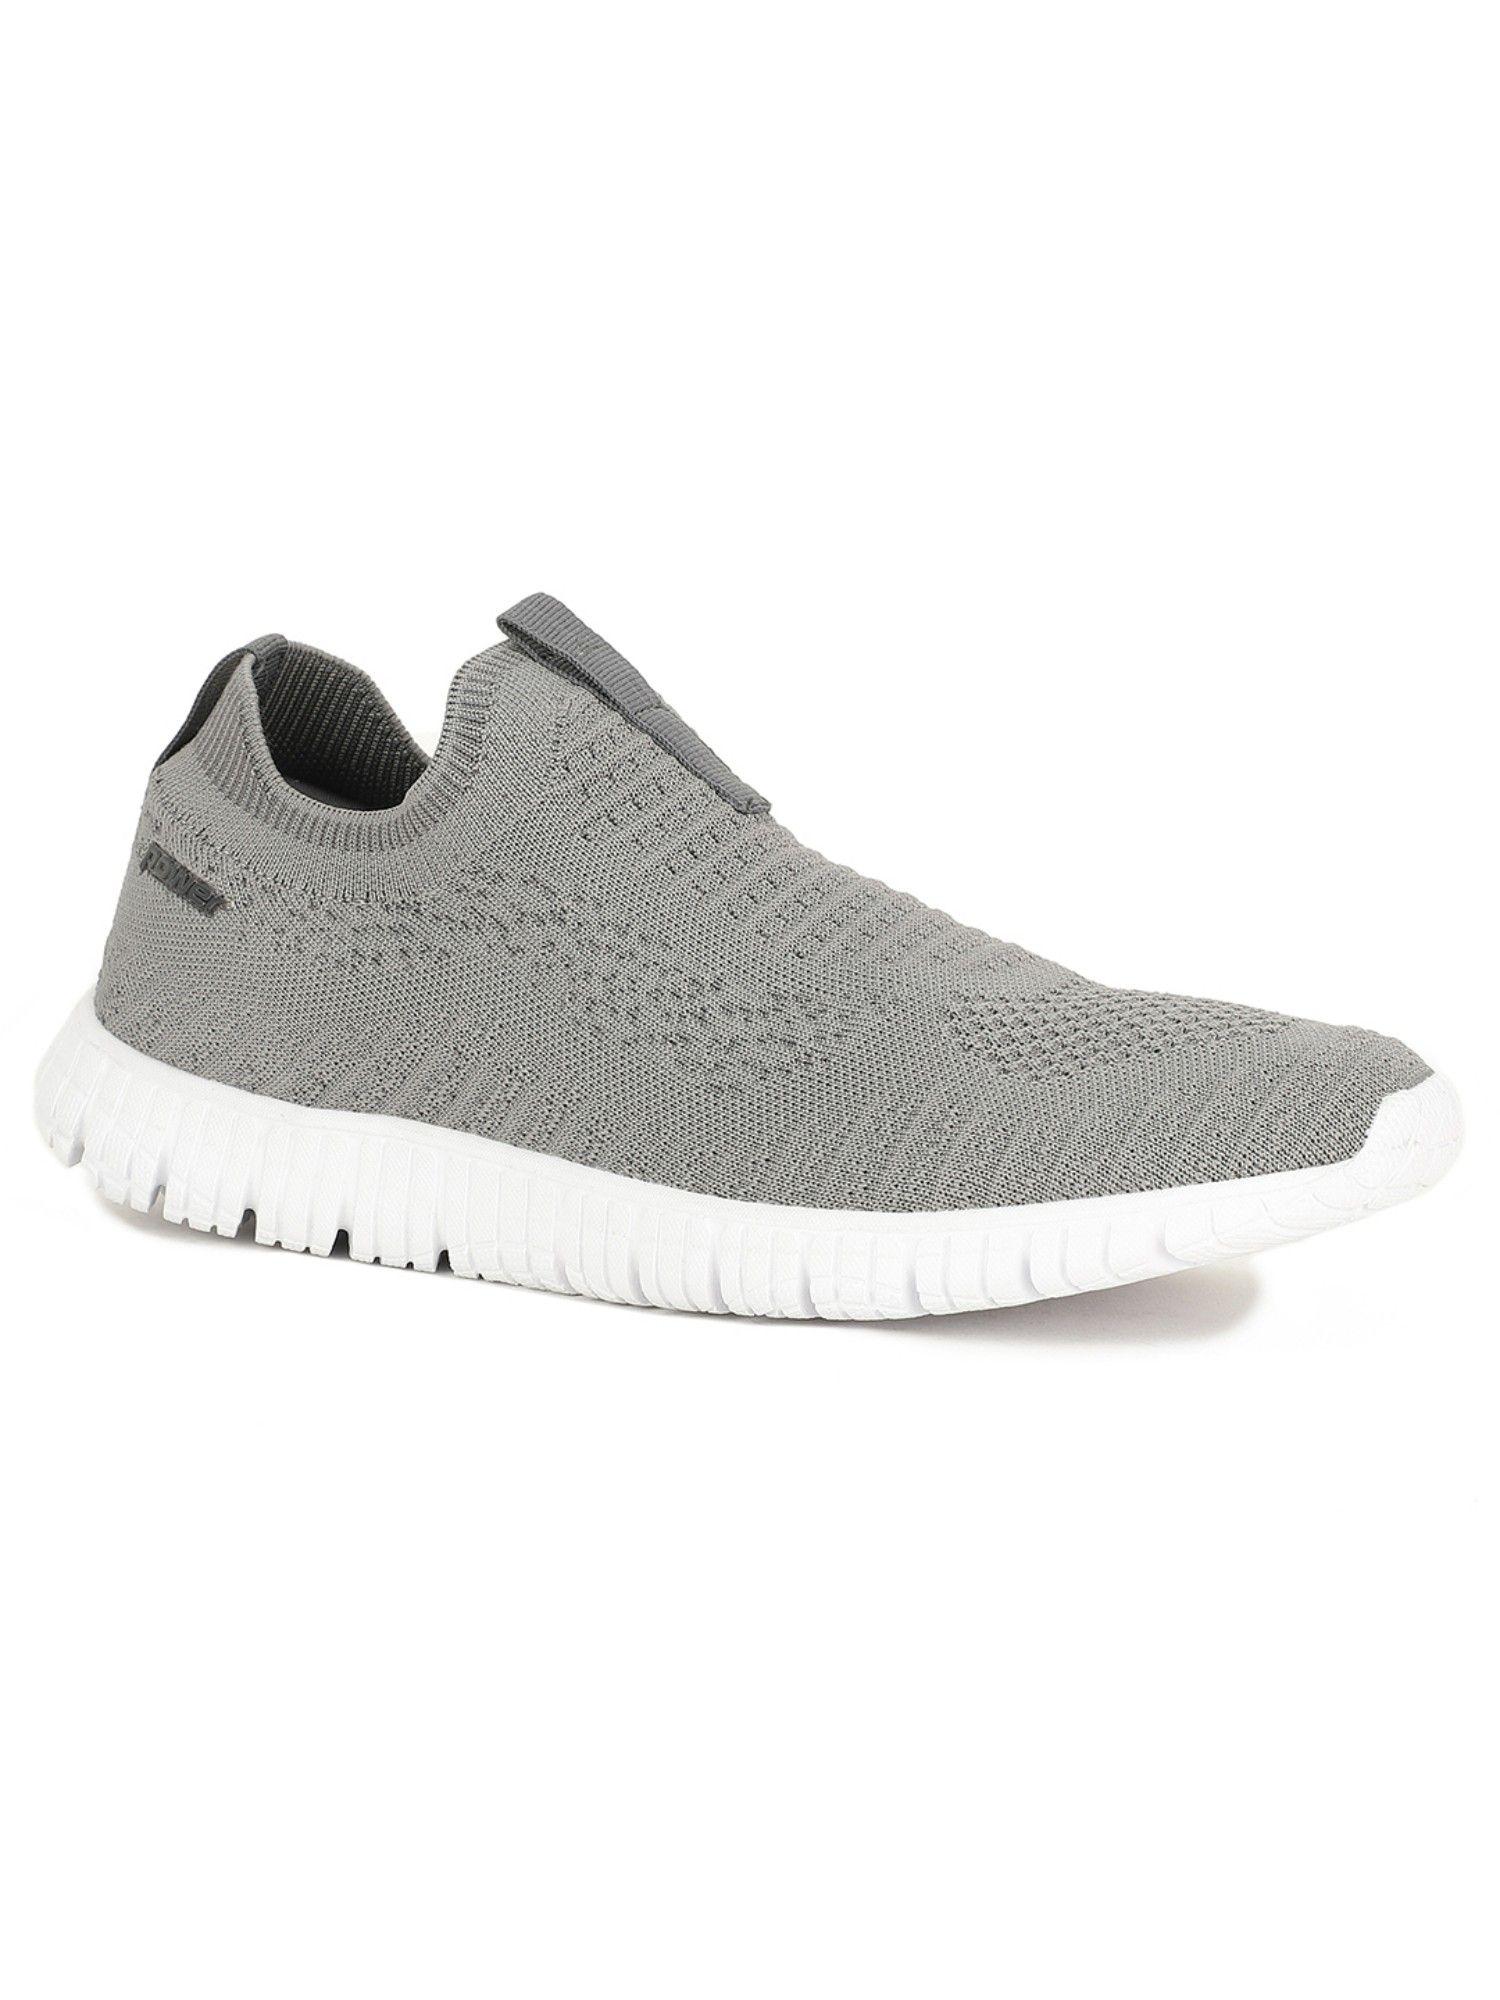 walking-shoes-for-men-(grey)